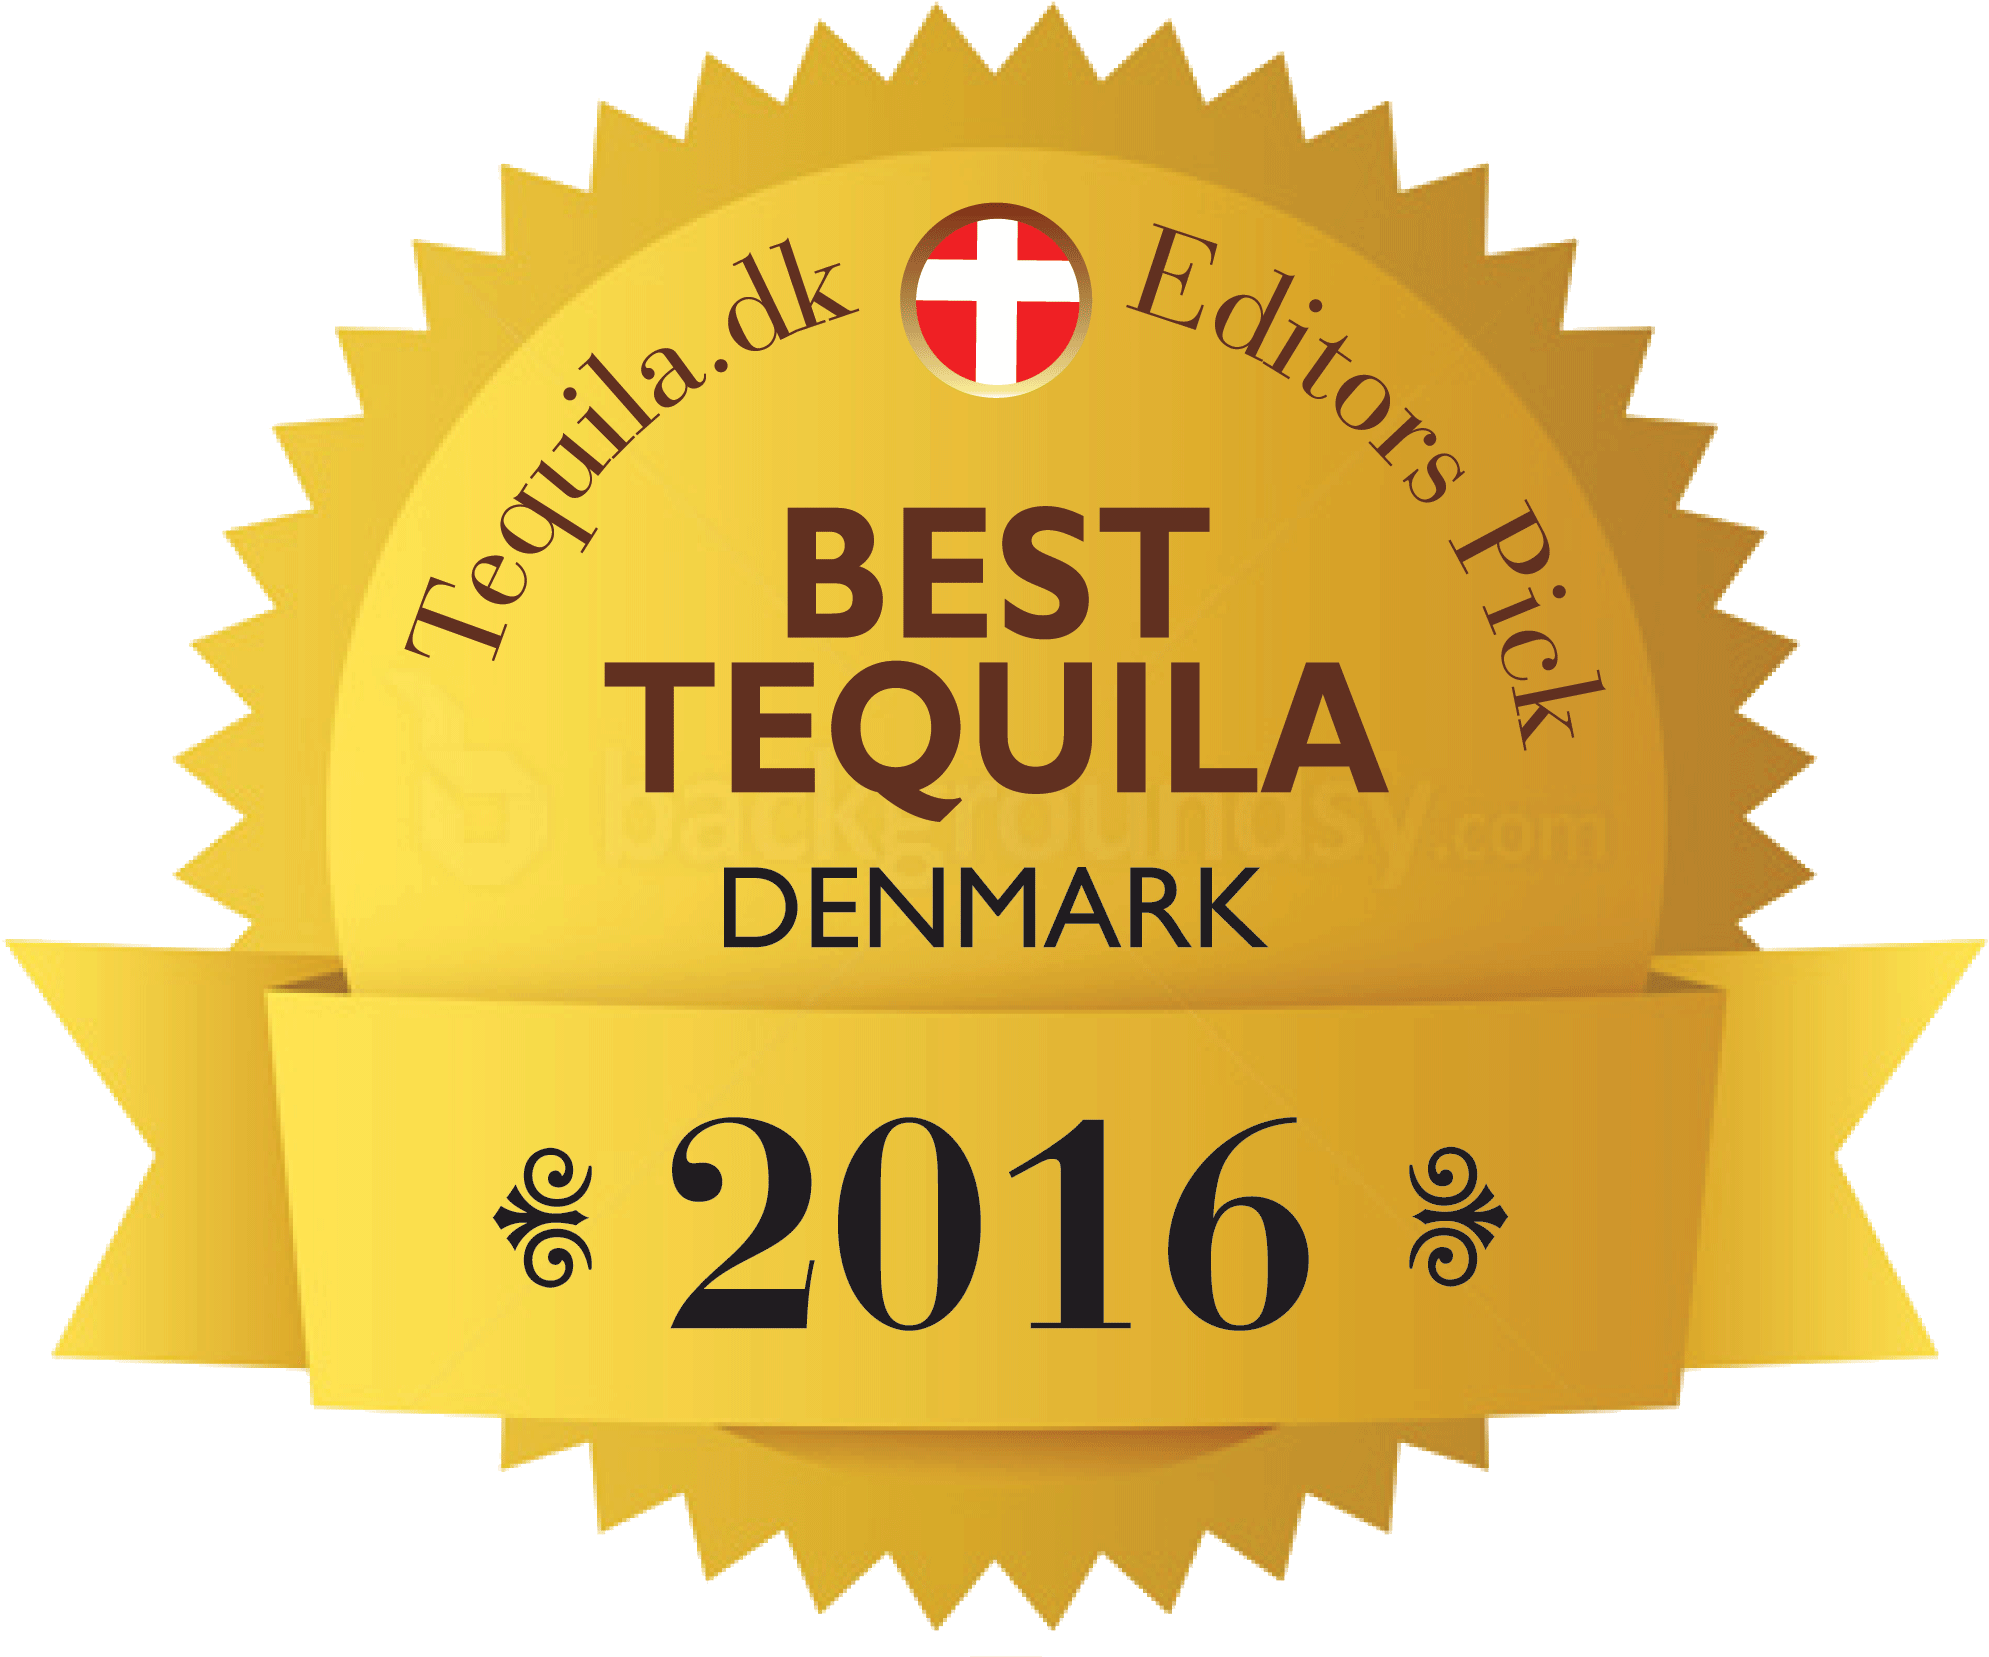 Best Tequila In Denmark - The Next Web (2480x2000)